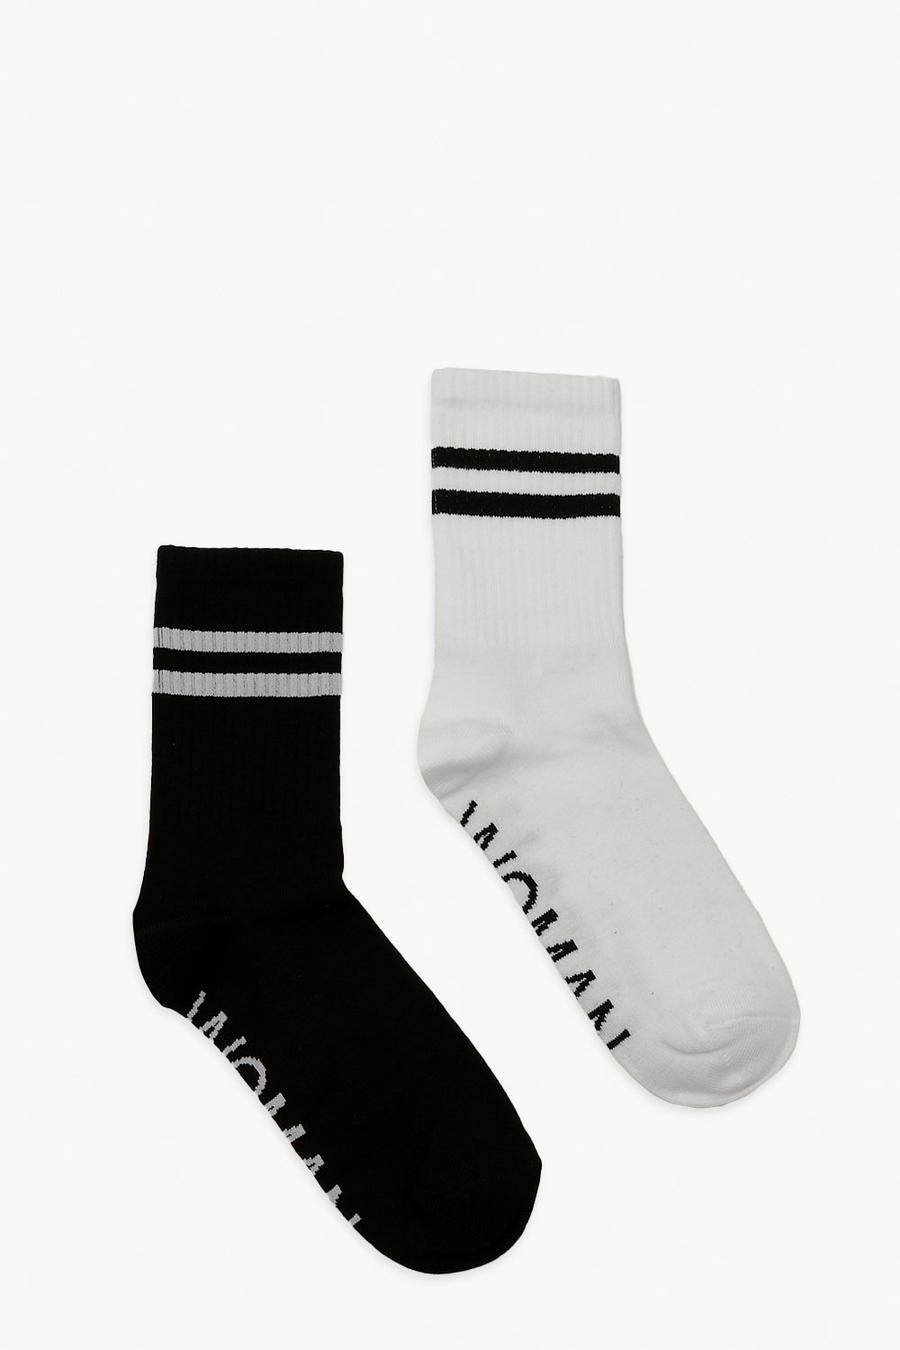 Blackwhite Woman Sports Socks 2 Pack